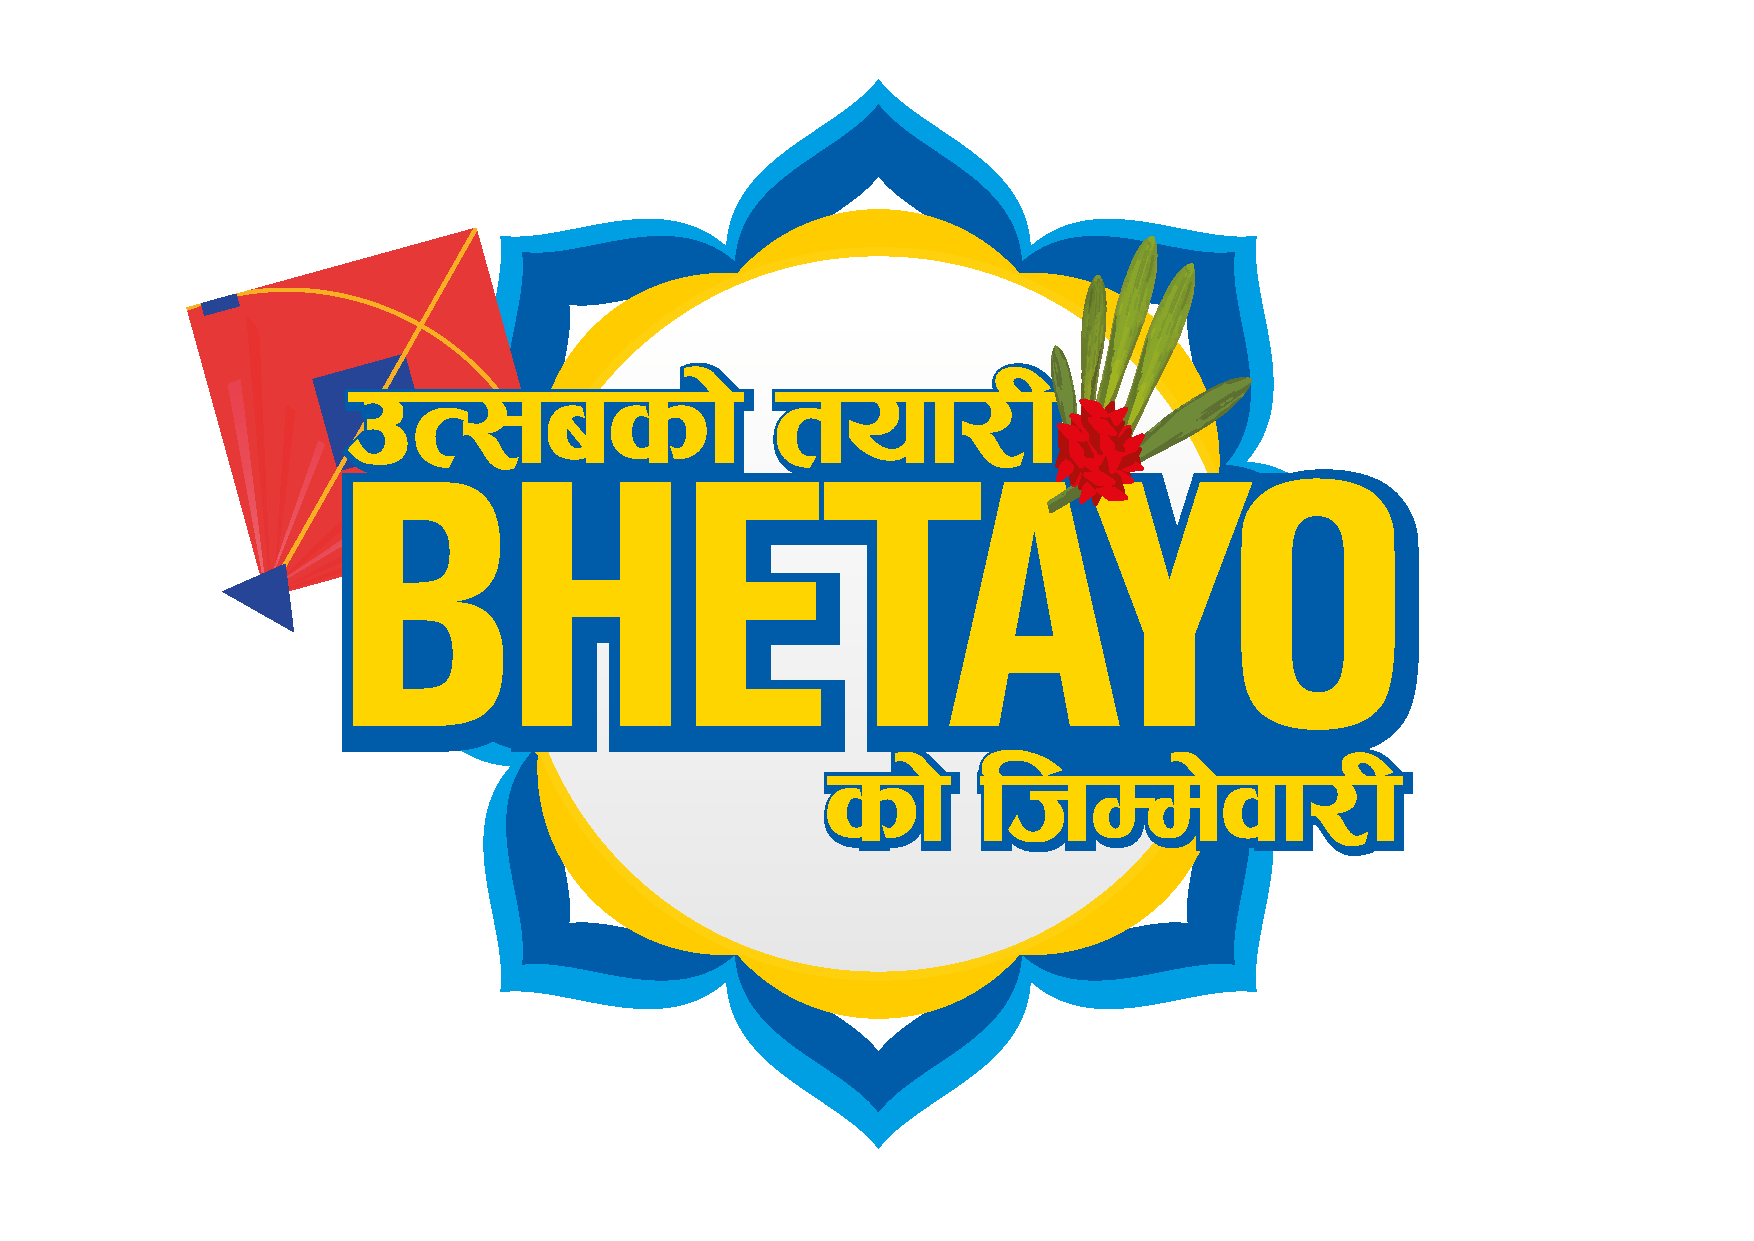 Bhetayo’s ‘Utsab ko tayarai Bhetayo ko jimewari’ offers users various offers and discounts